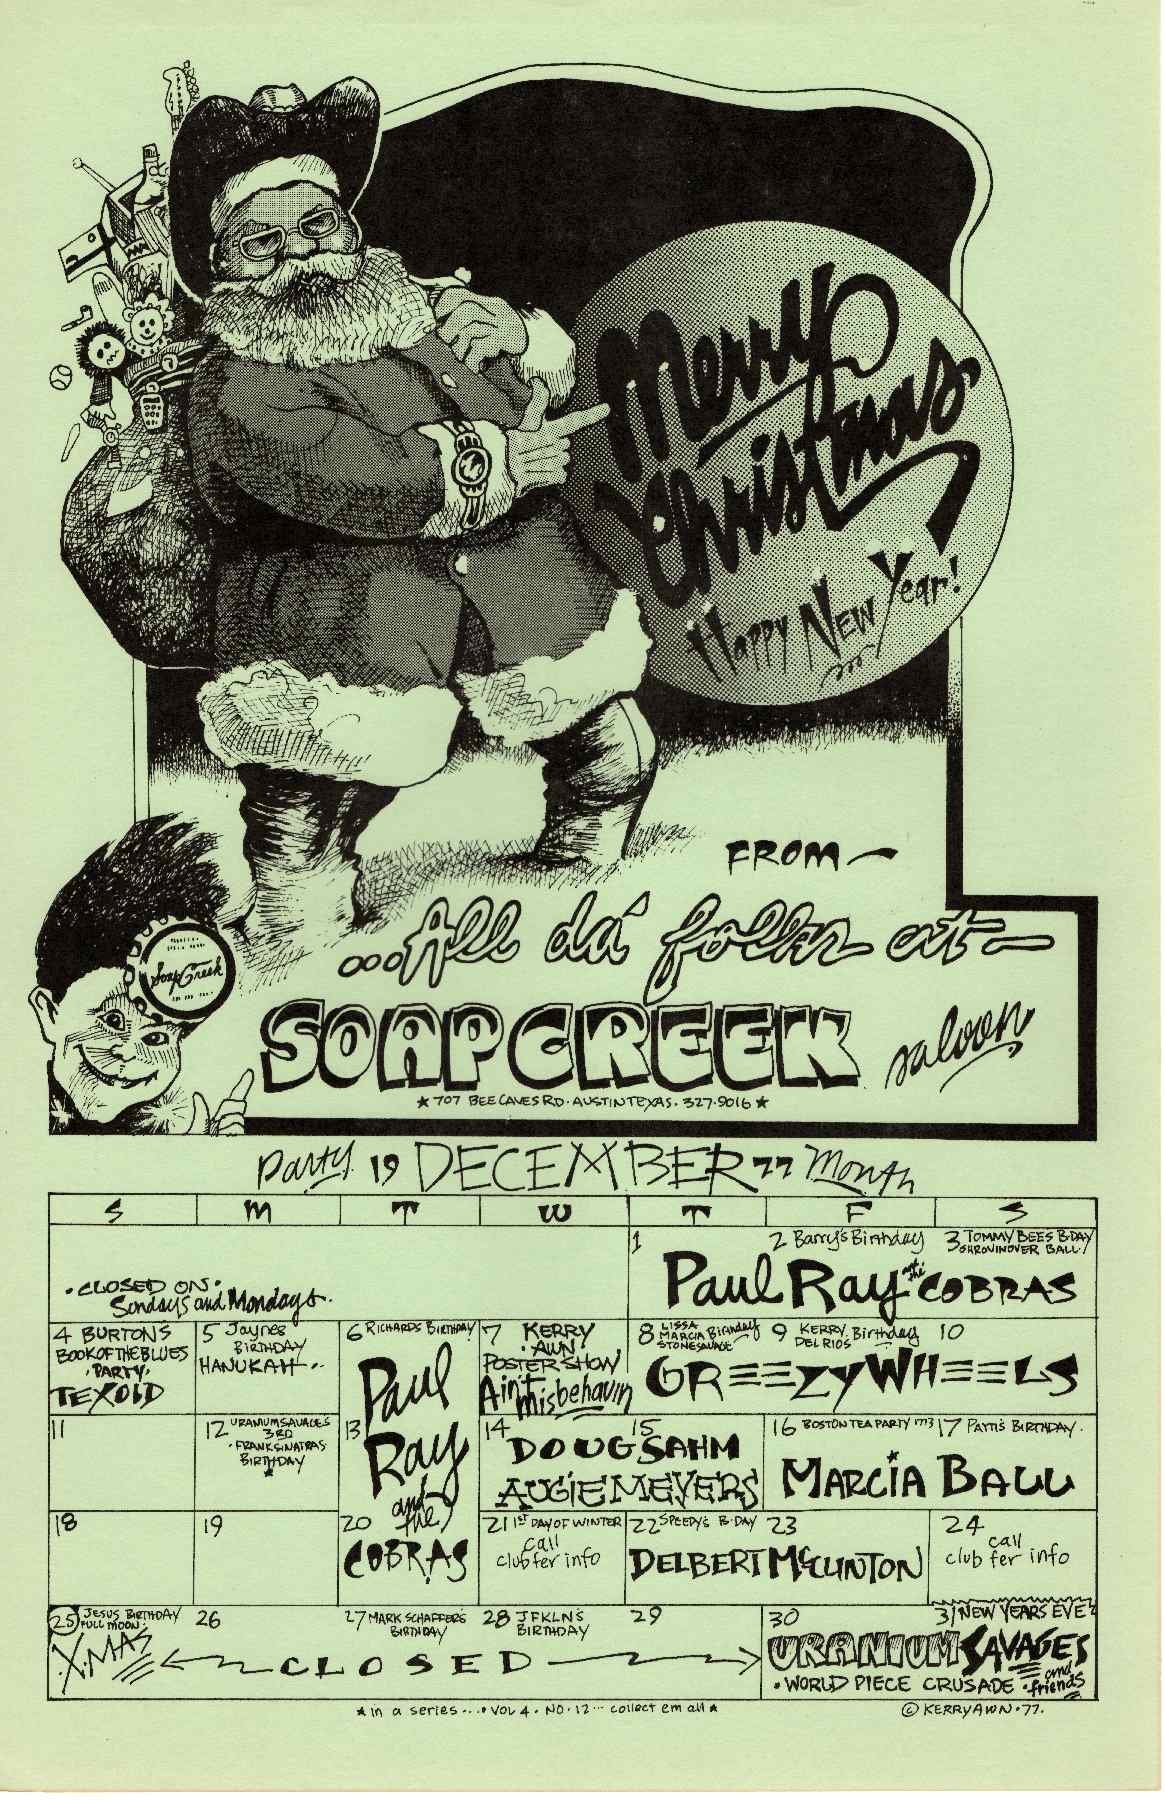 1977.12.December Calendar.Soap Creek Saloon.Awn.JPG